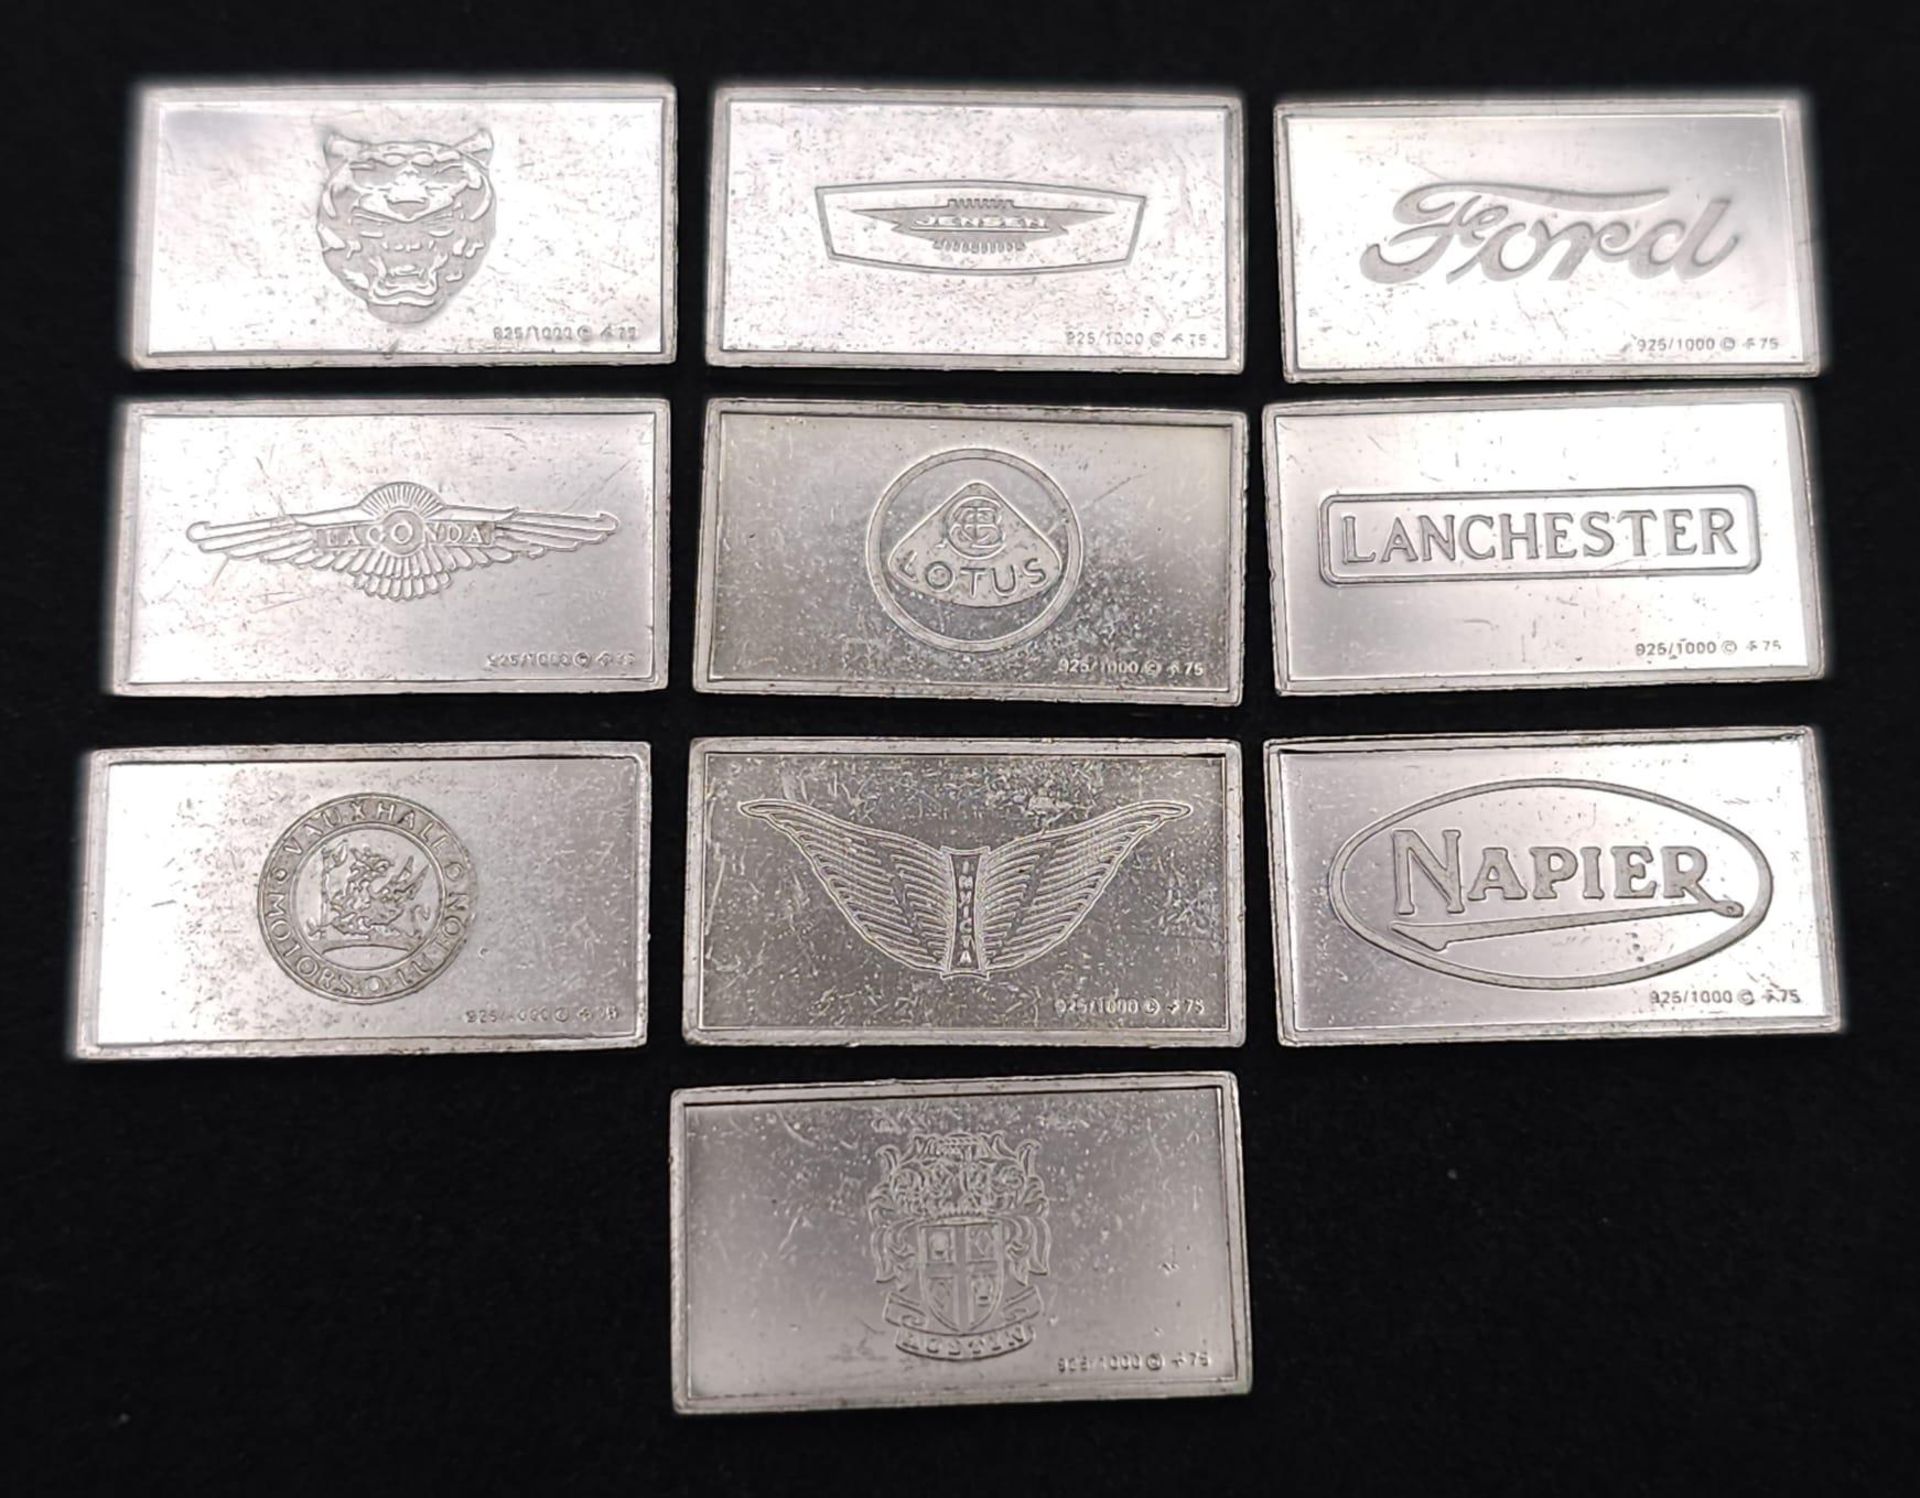 TEN sterling silver European Car Manufacturer's plates, including Jaguar, Lagonda, Napier, Jensen,